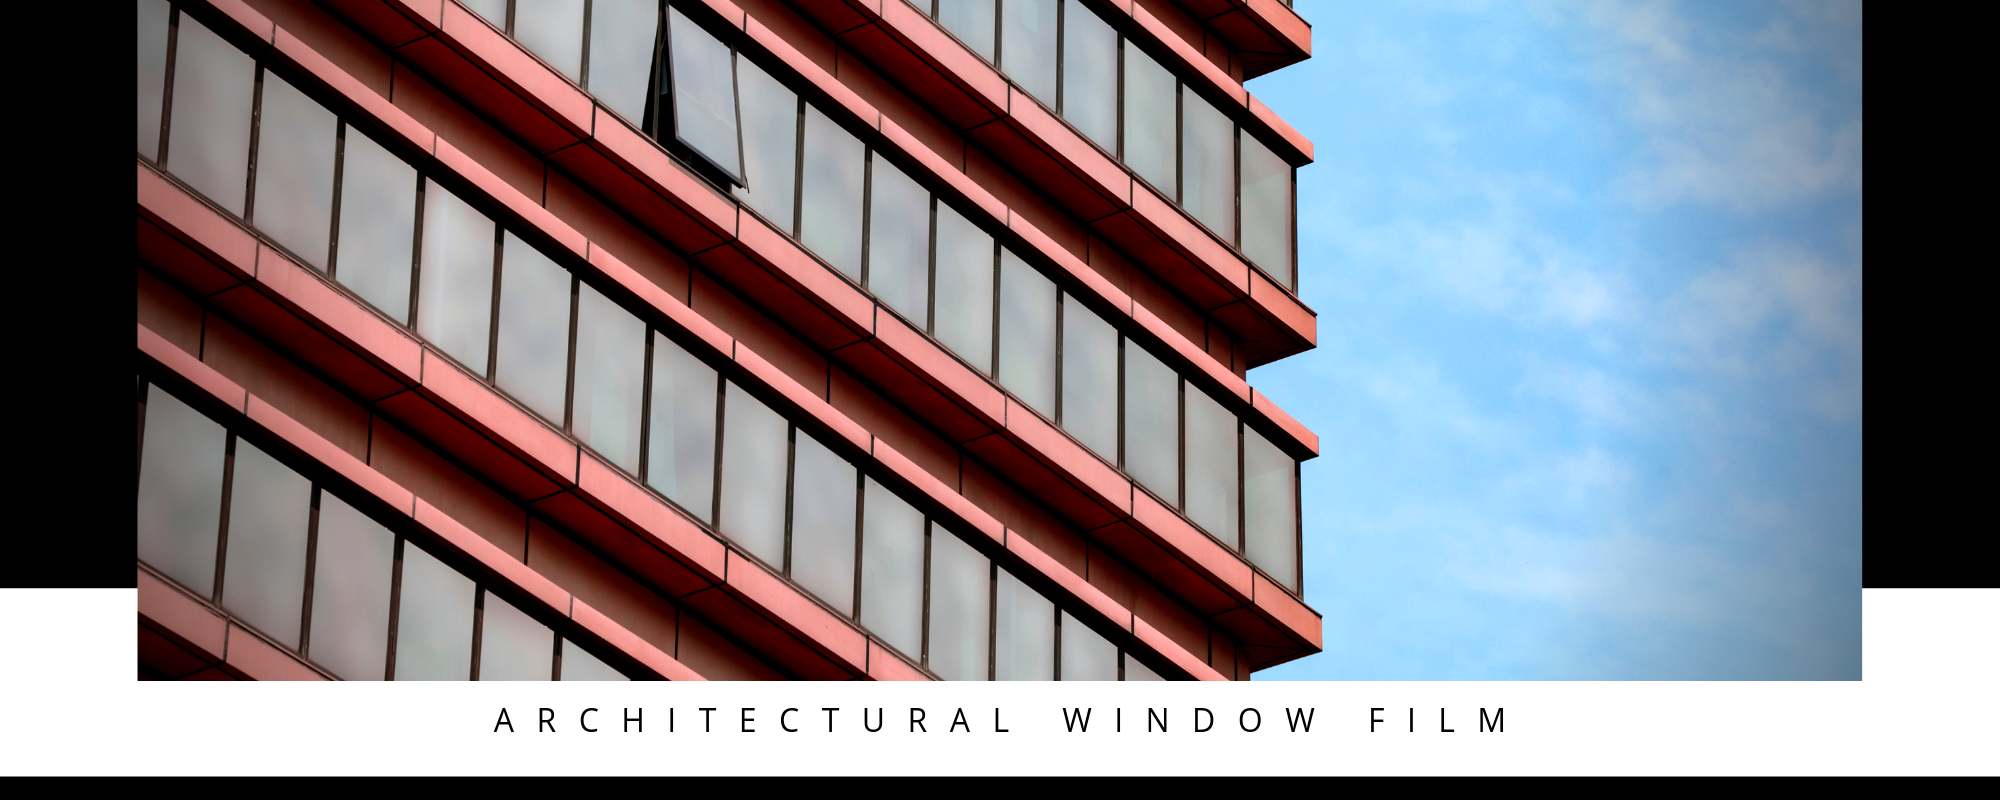 Architectural window film 